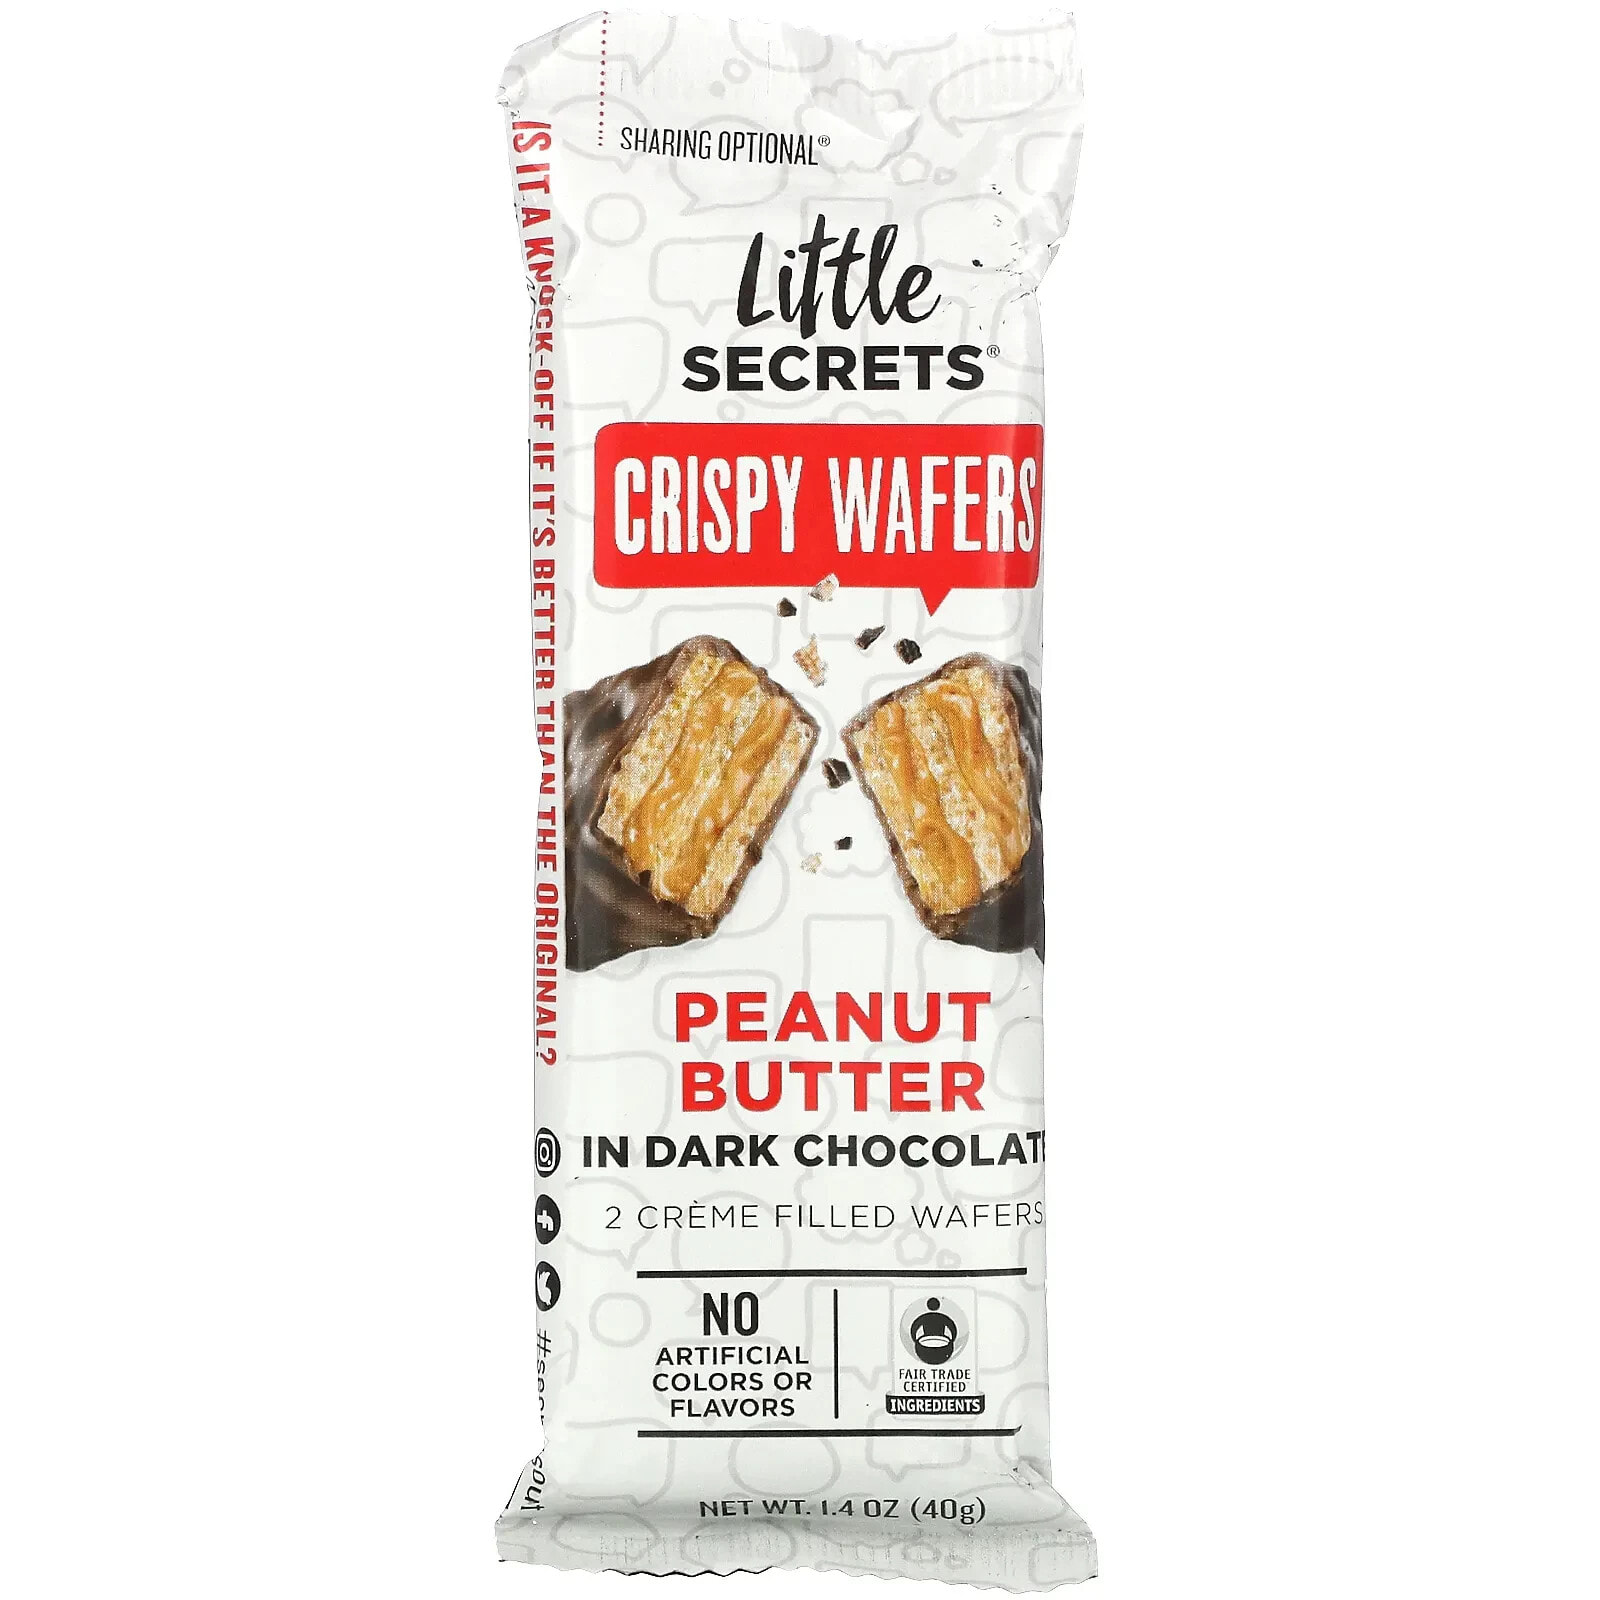 Crispy Wafers in Dark Chocolate, Peanut Butter Creme, 1.4 oz (40 g)